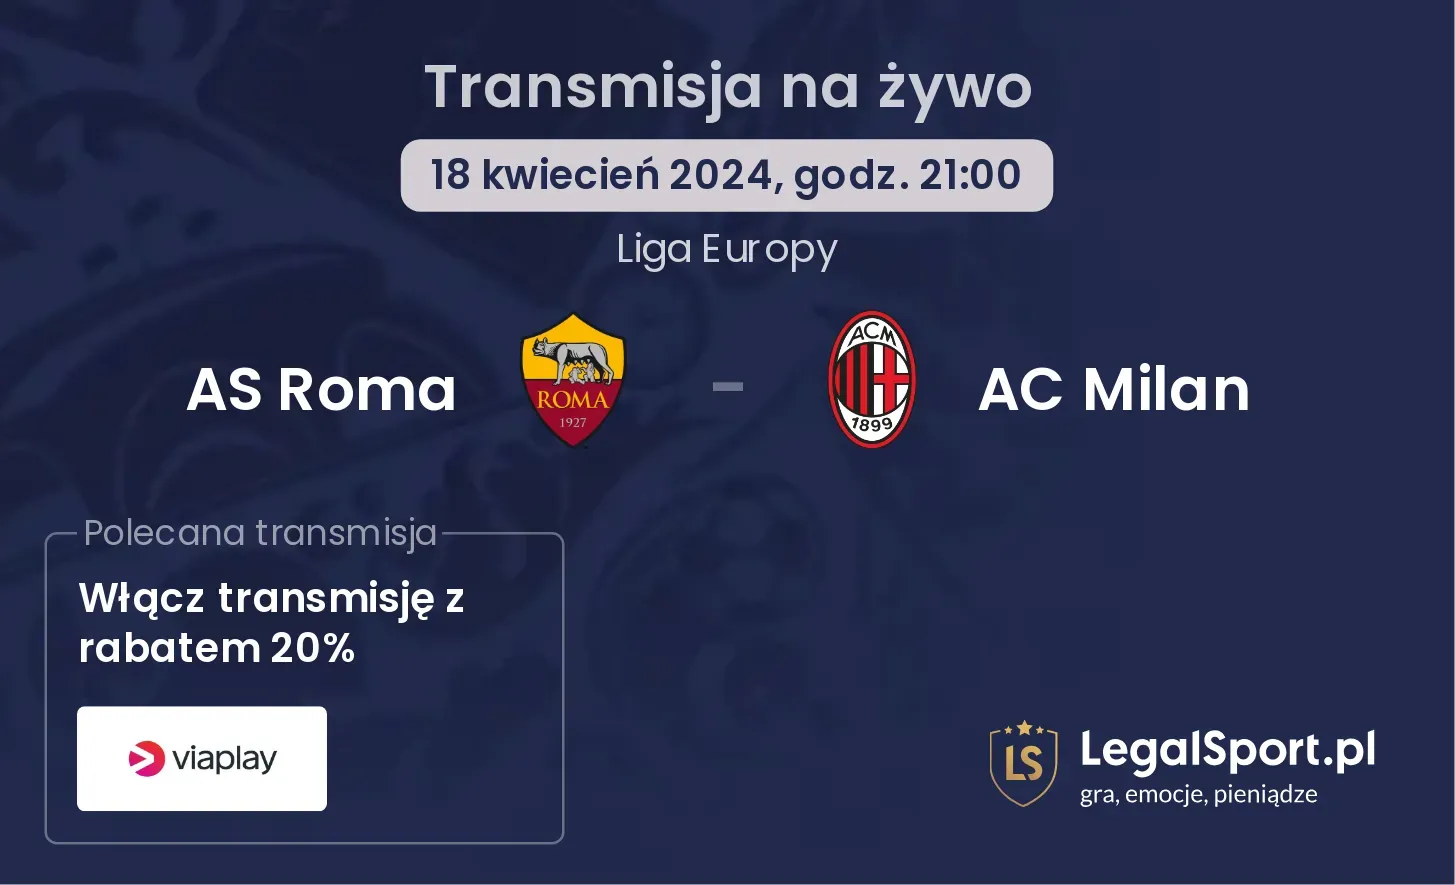 AS Roma - AC Milan transmisja na żywo